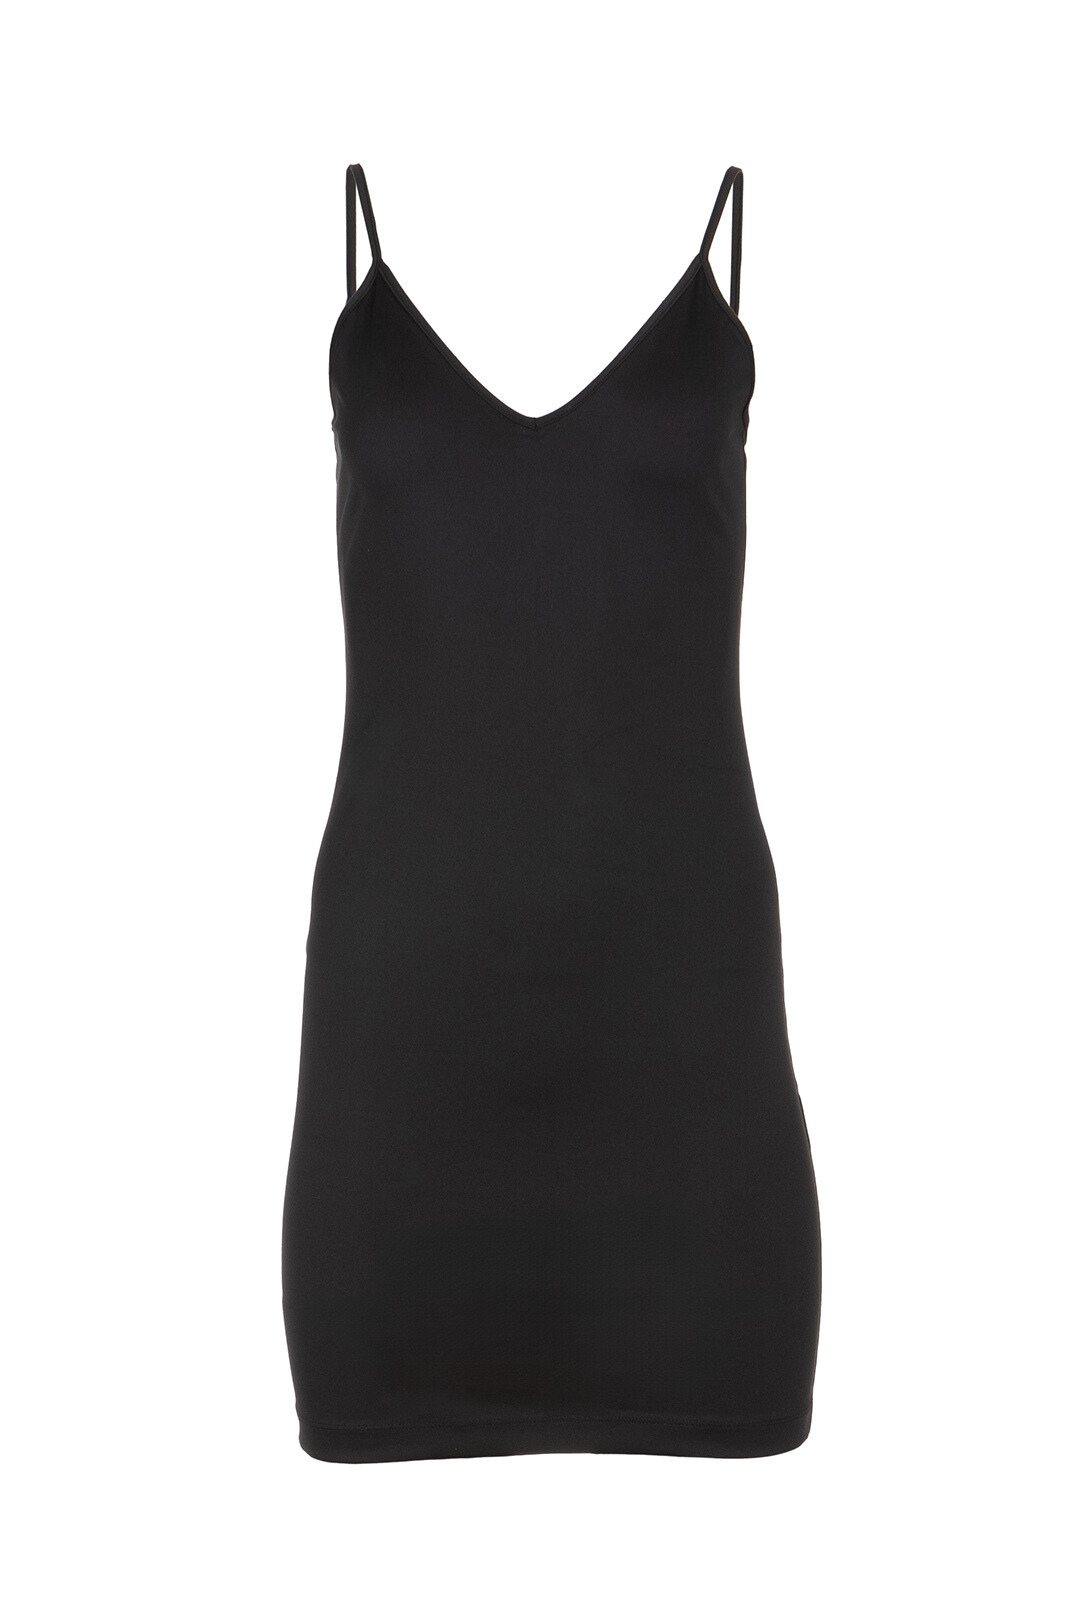 Black slip dress with thin straps | Daniella